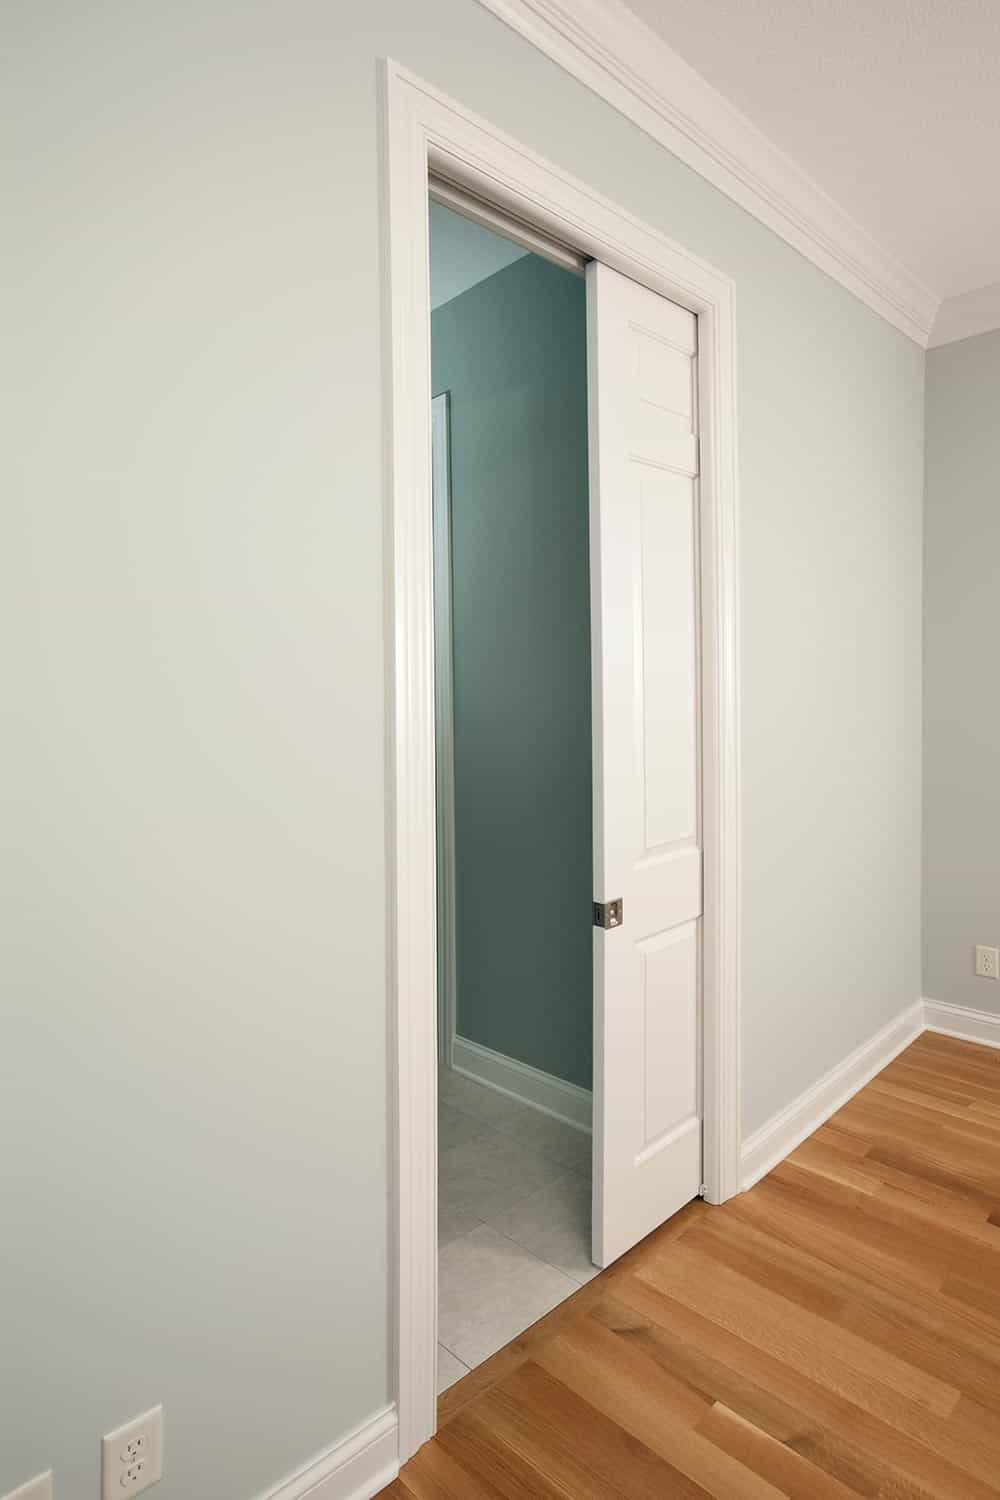 A new pocket door in a house bedroom entrance to bathroom